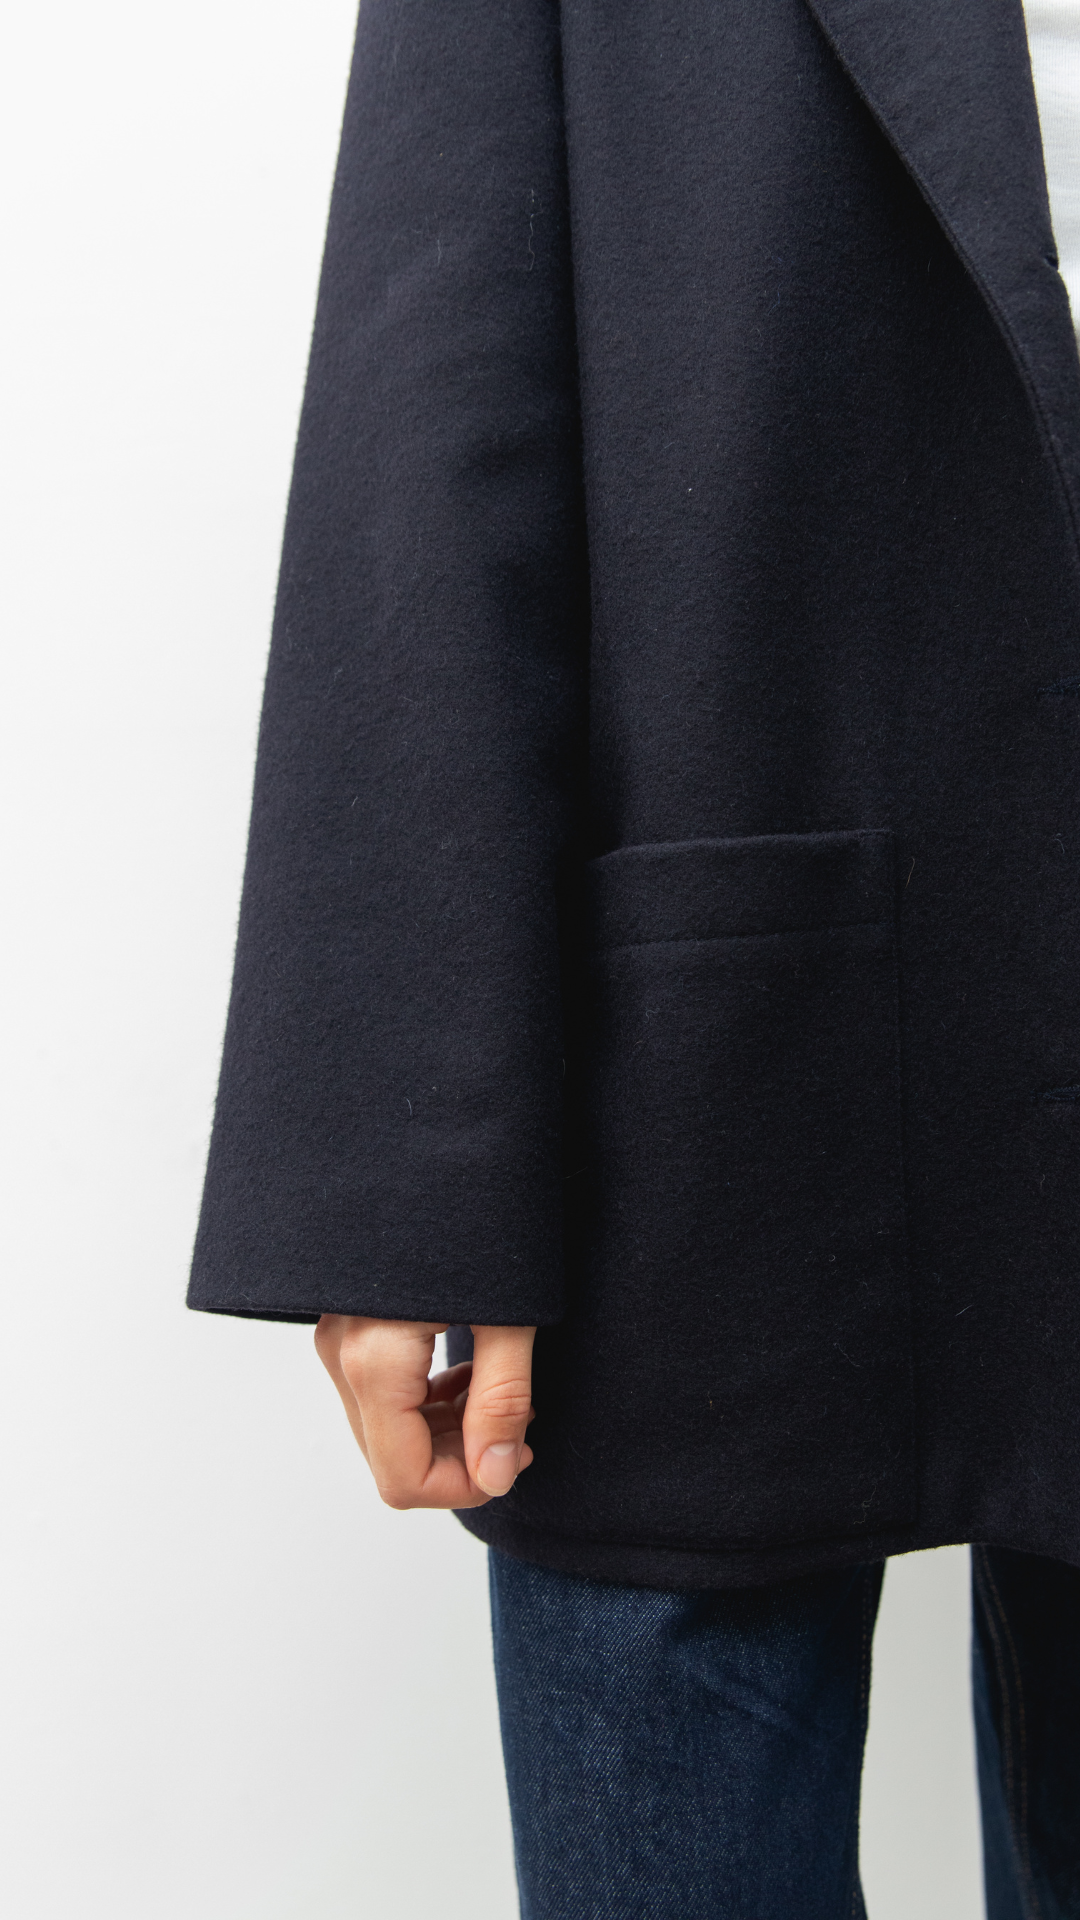 Doris - Workwear inspired blazer